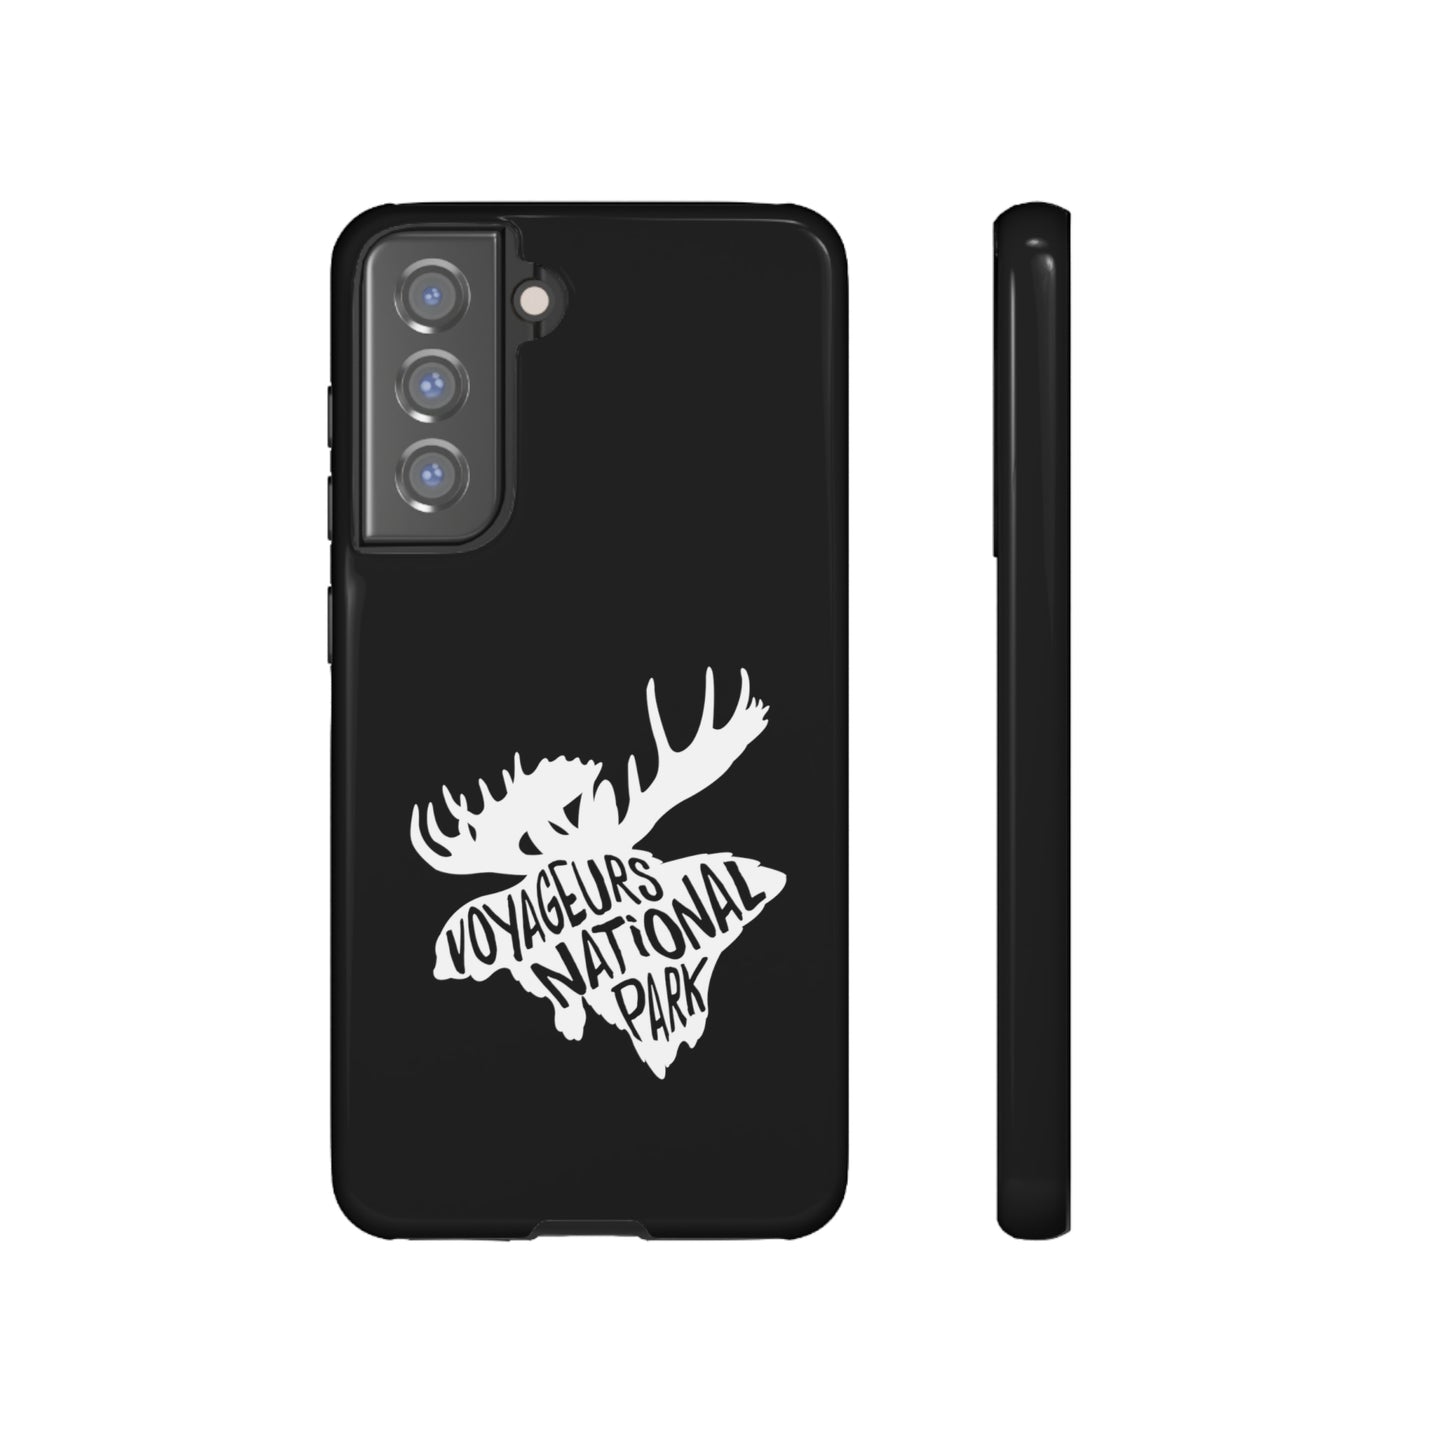 Voyageurs National Park iPhone Case - Moose Design